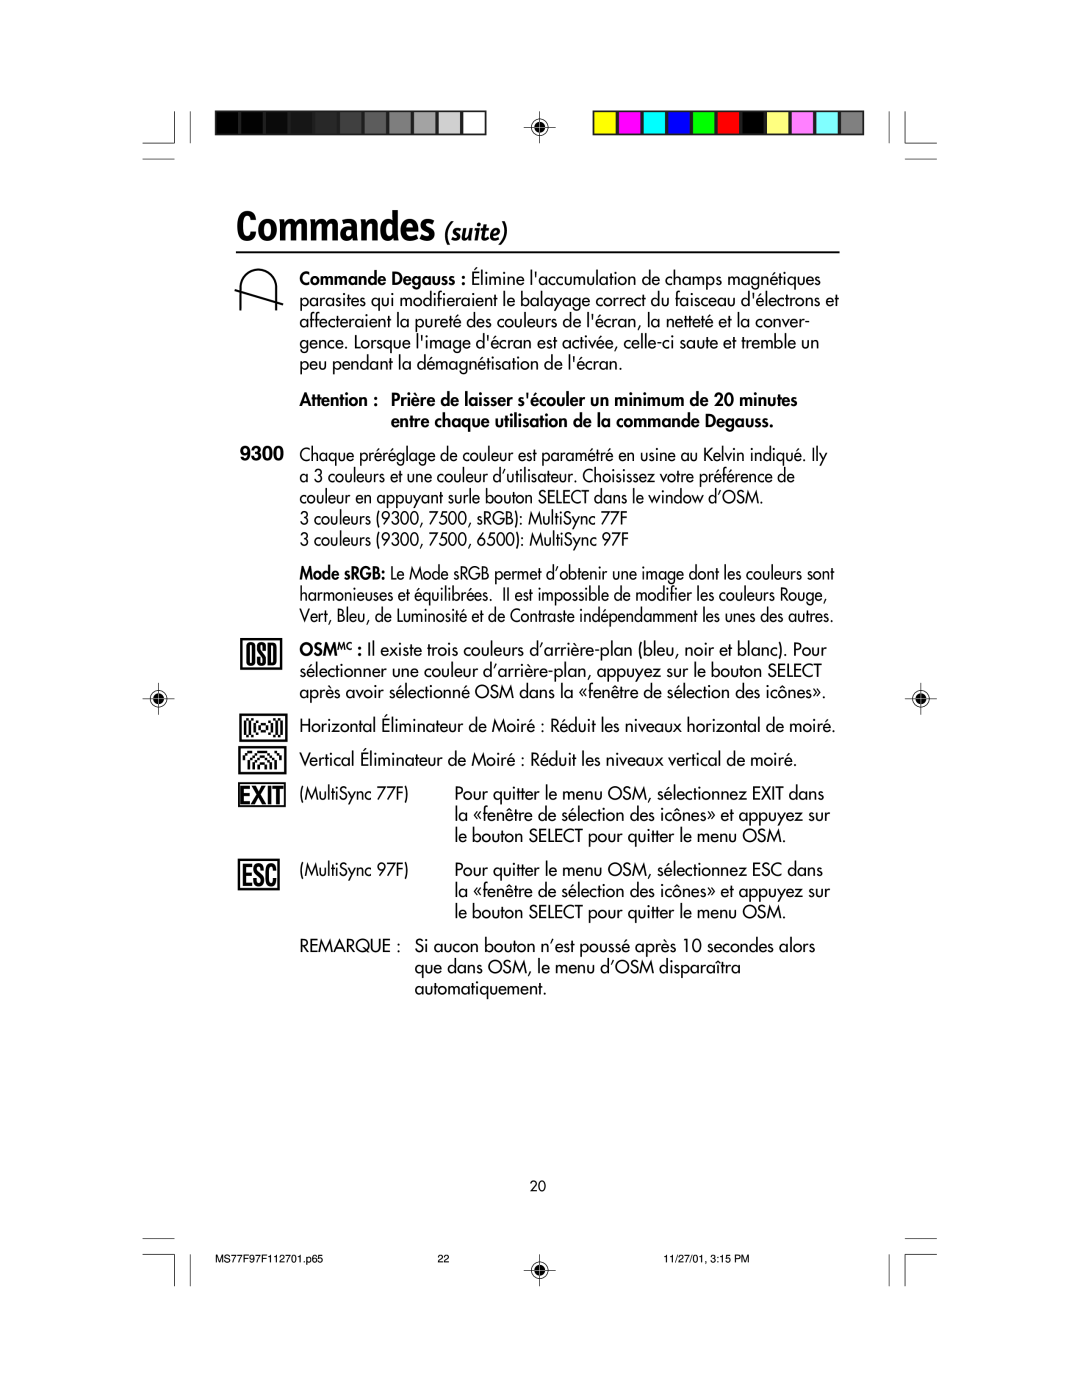 NEC 97F, 77F manual Commandes suite, Exit 